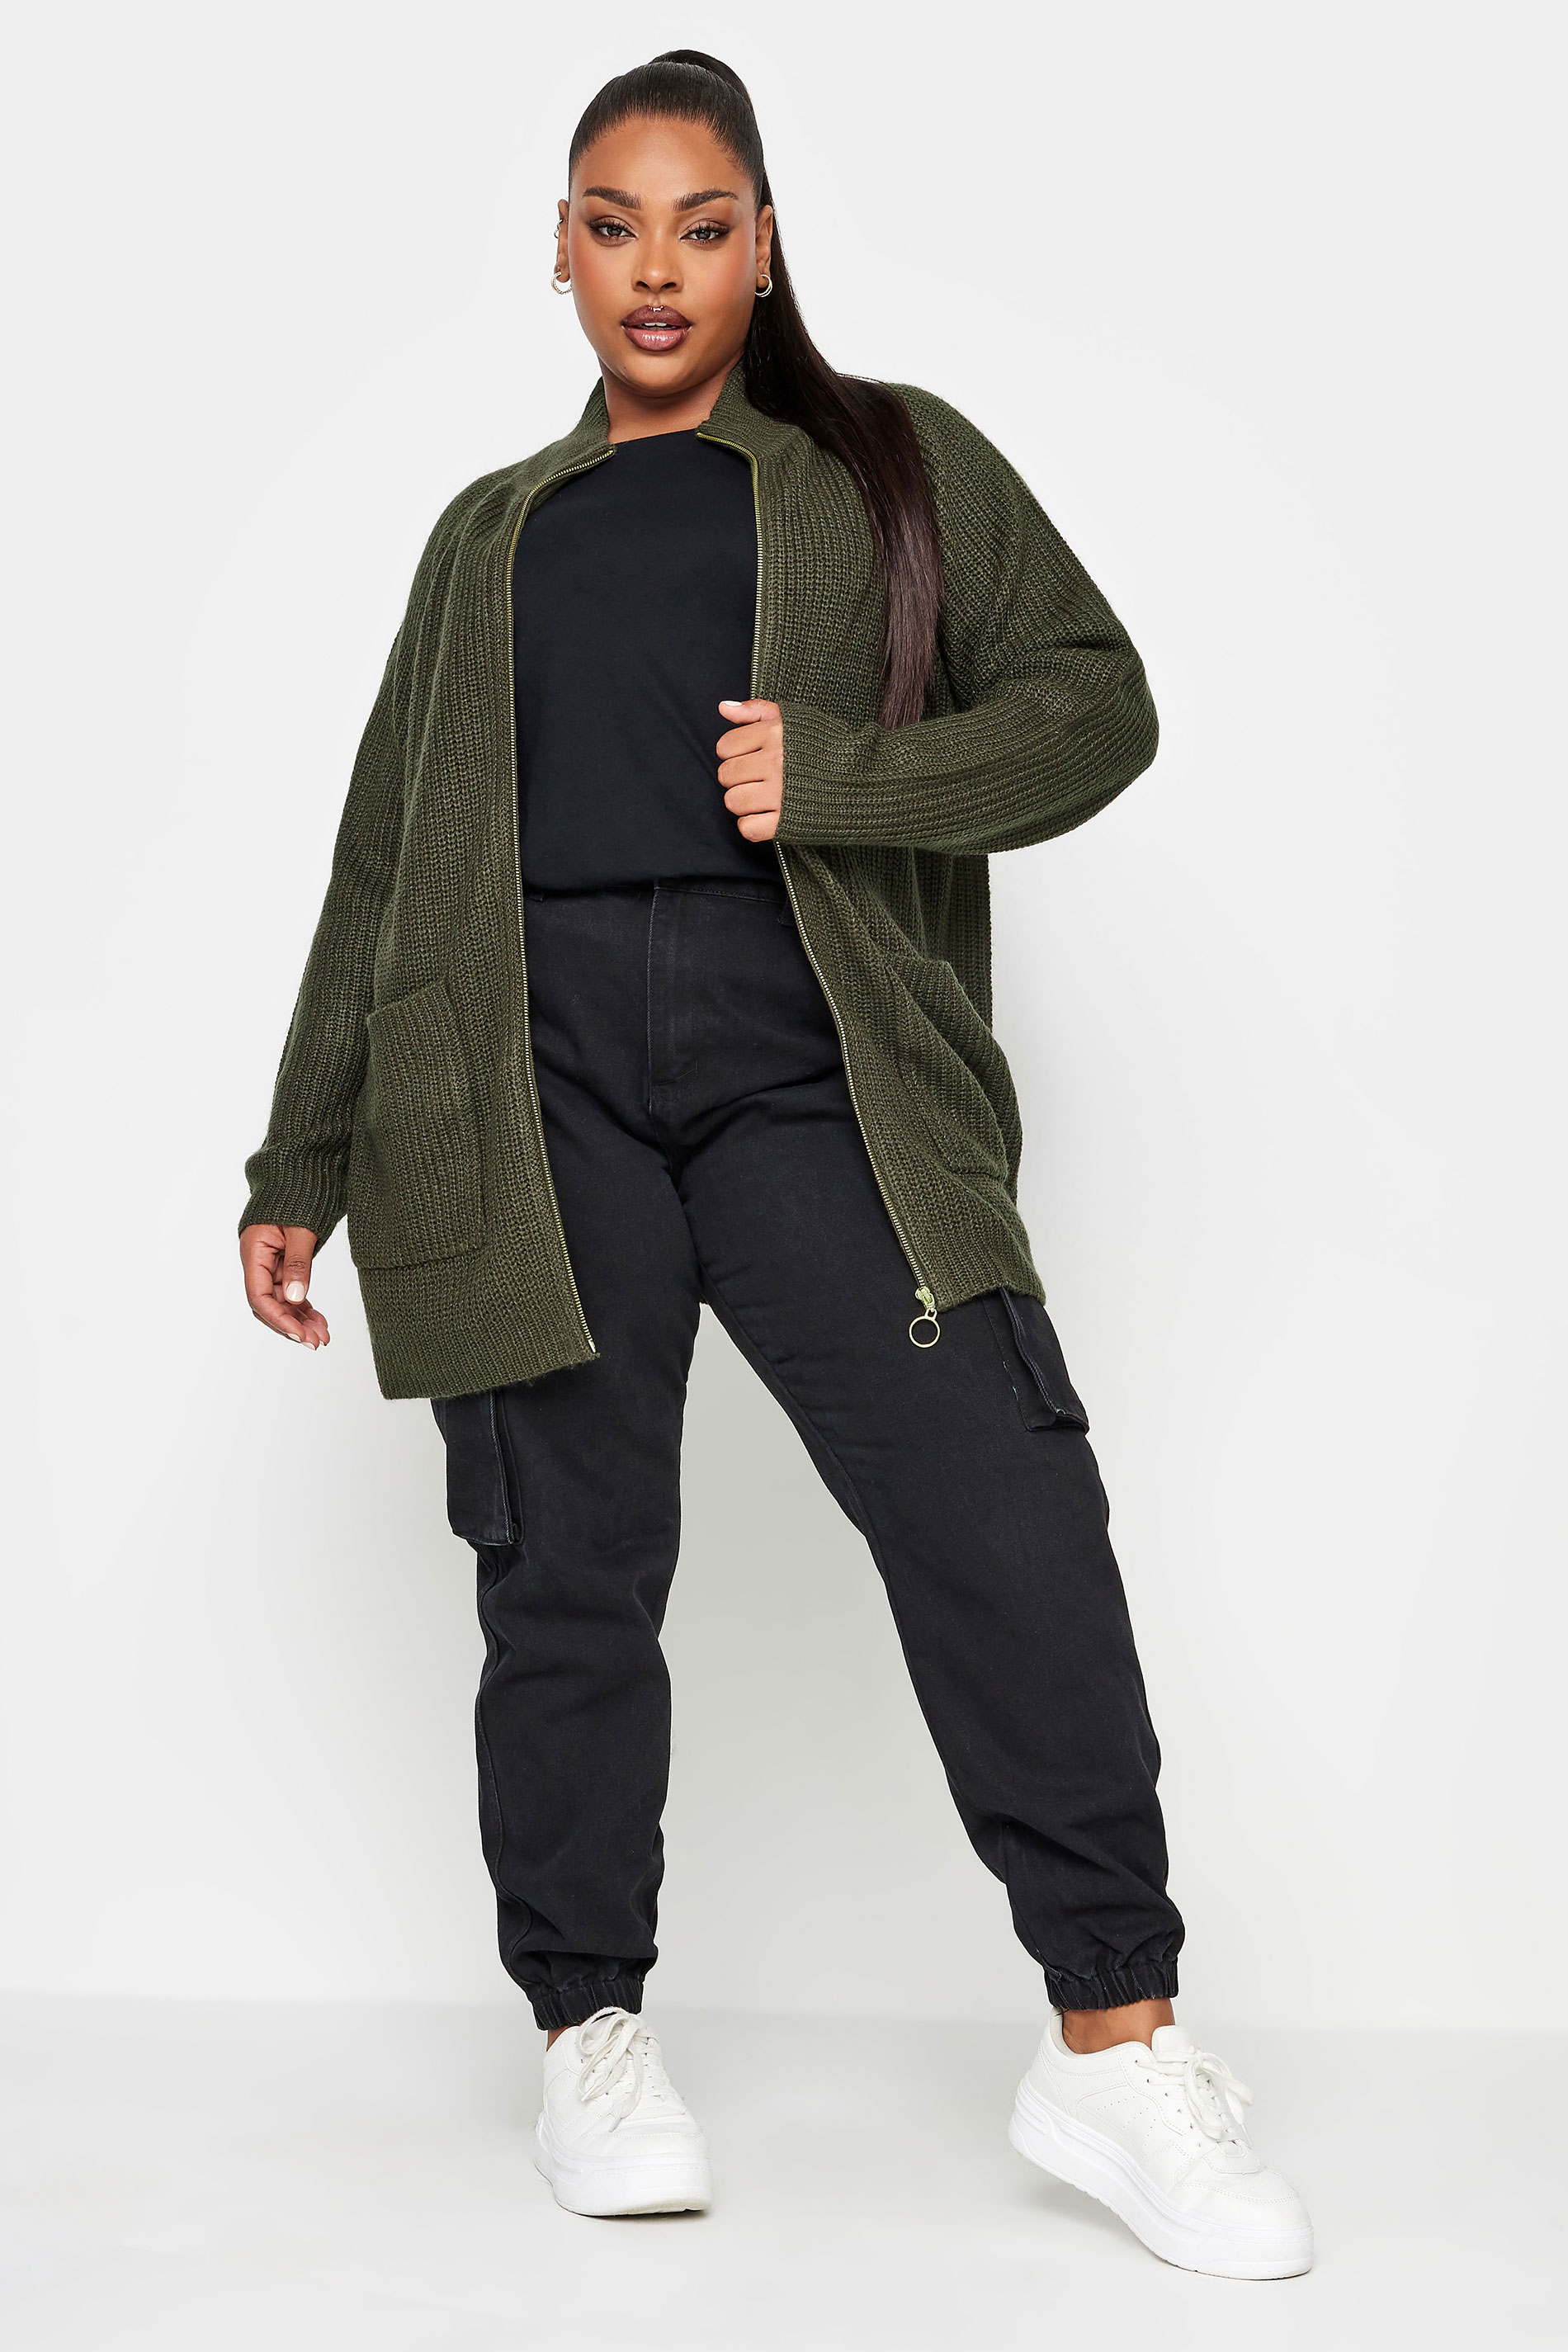 YOURS Plus Size Khaki Green Zip Through Cardigan | Yours Clothing 1